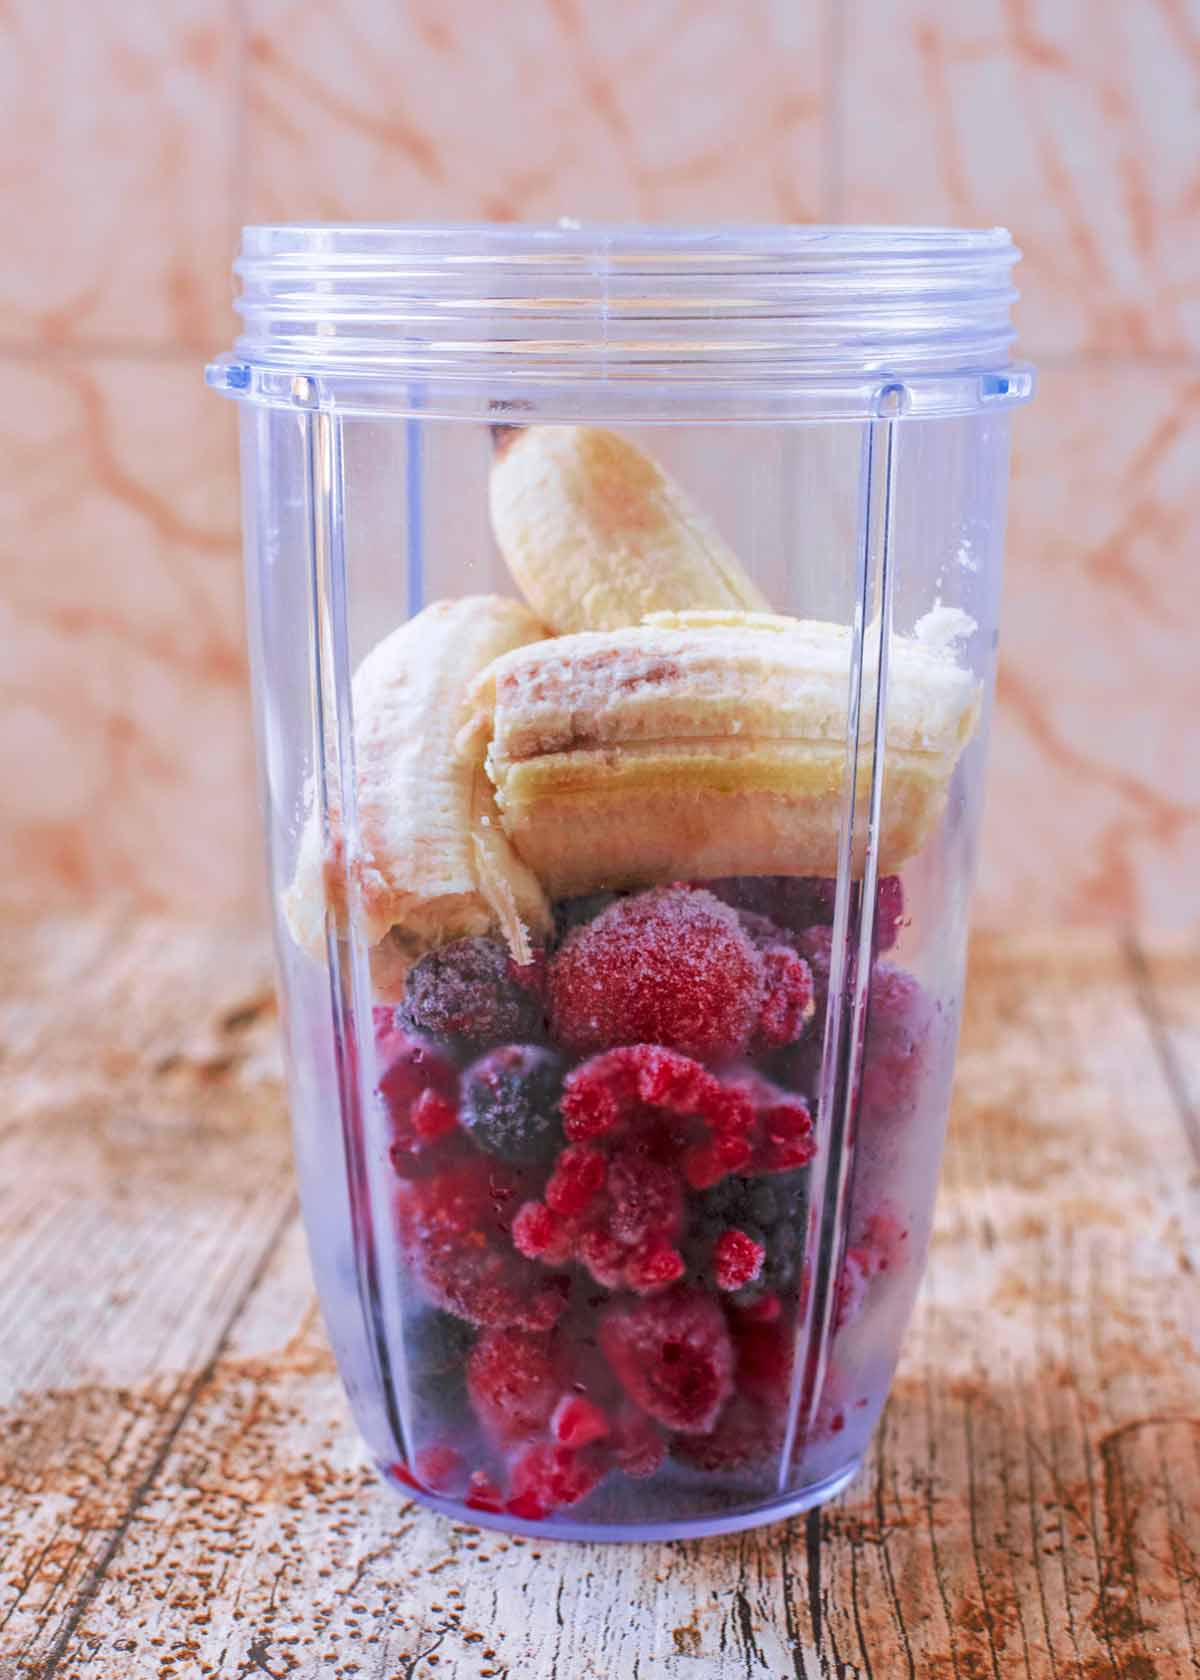 Frozen berries and banana in a blender jug.